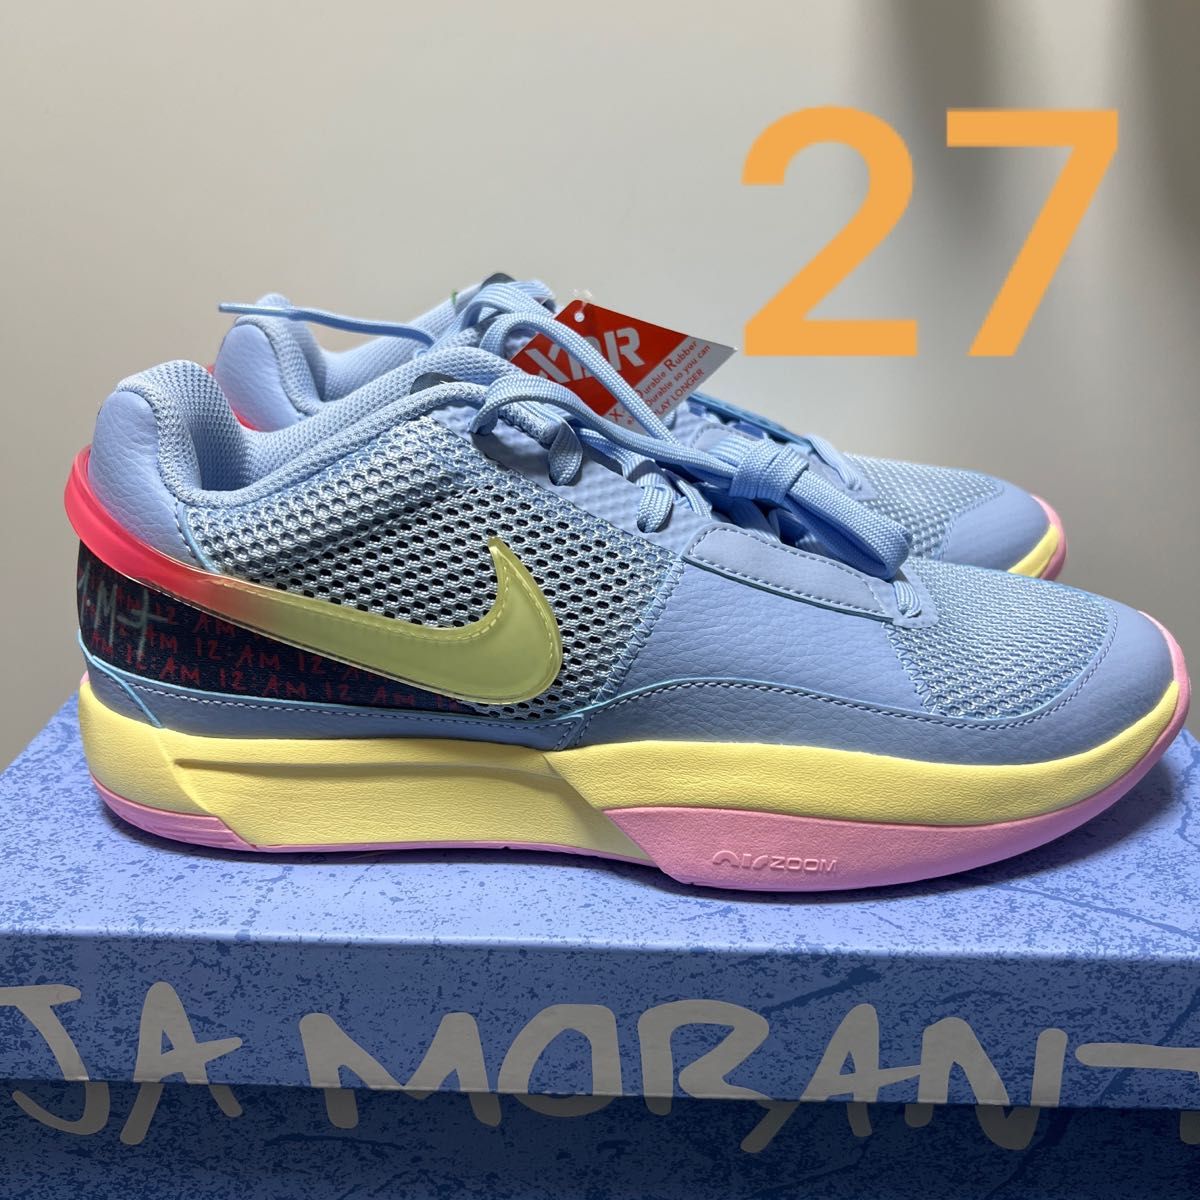 27cm US9 Nike Ja 1 "Day One"ナイキ ジャ1 "デイ ワン" モラント luka kd lebron